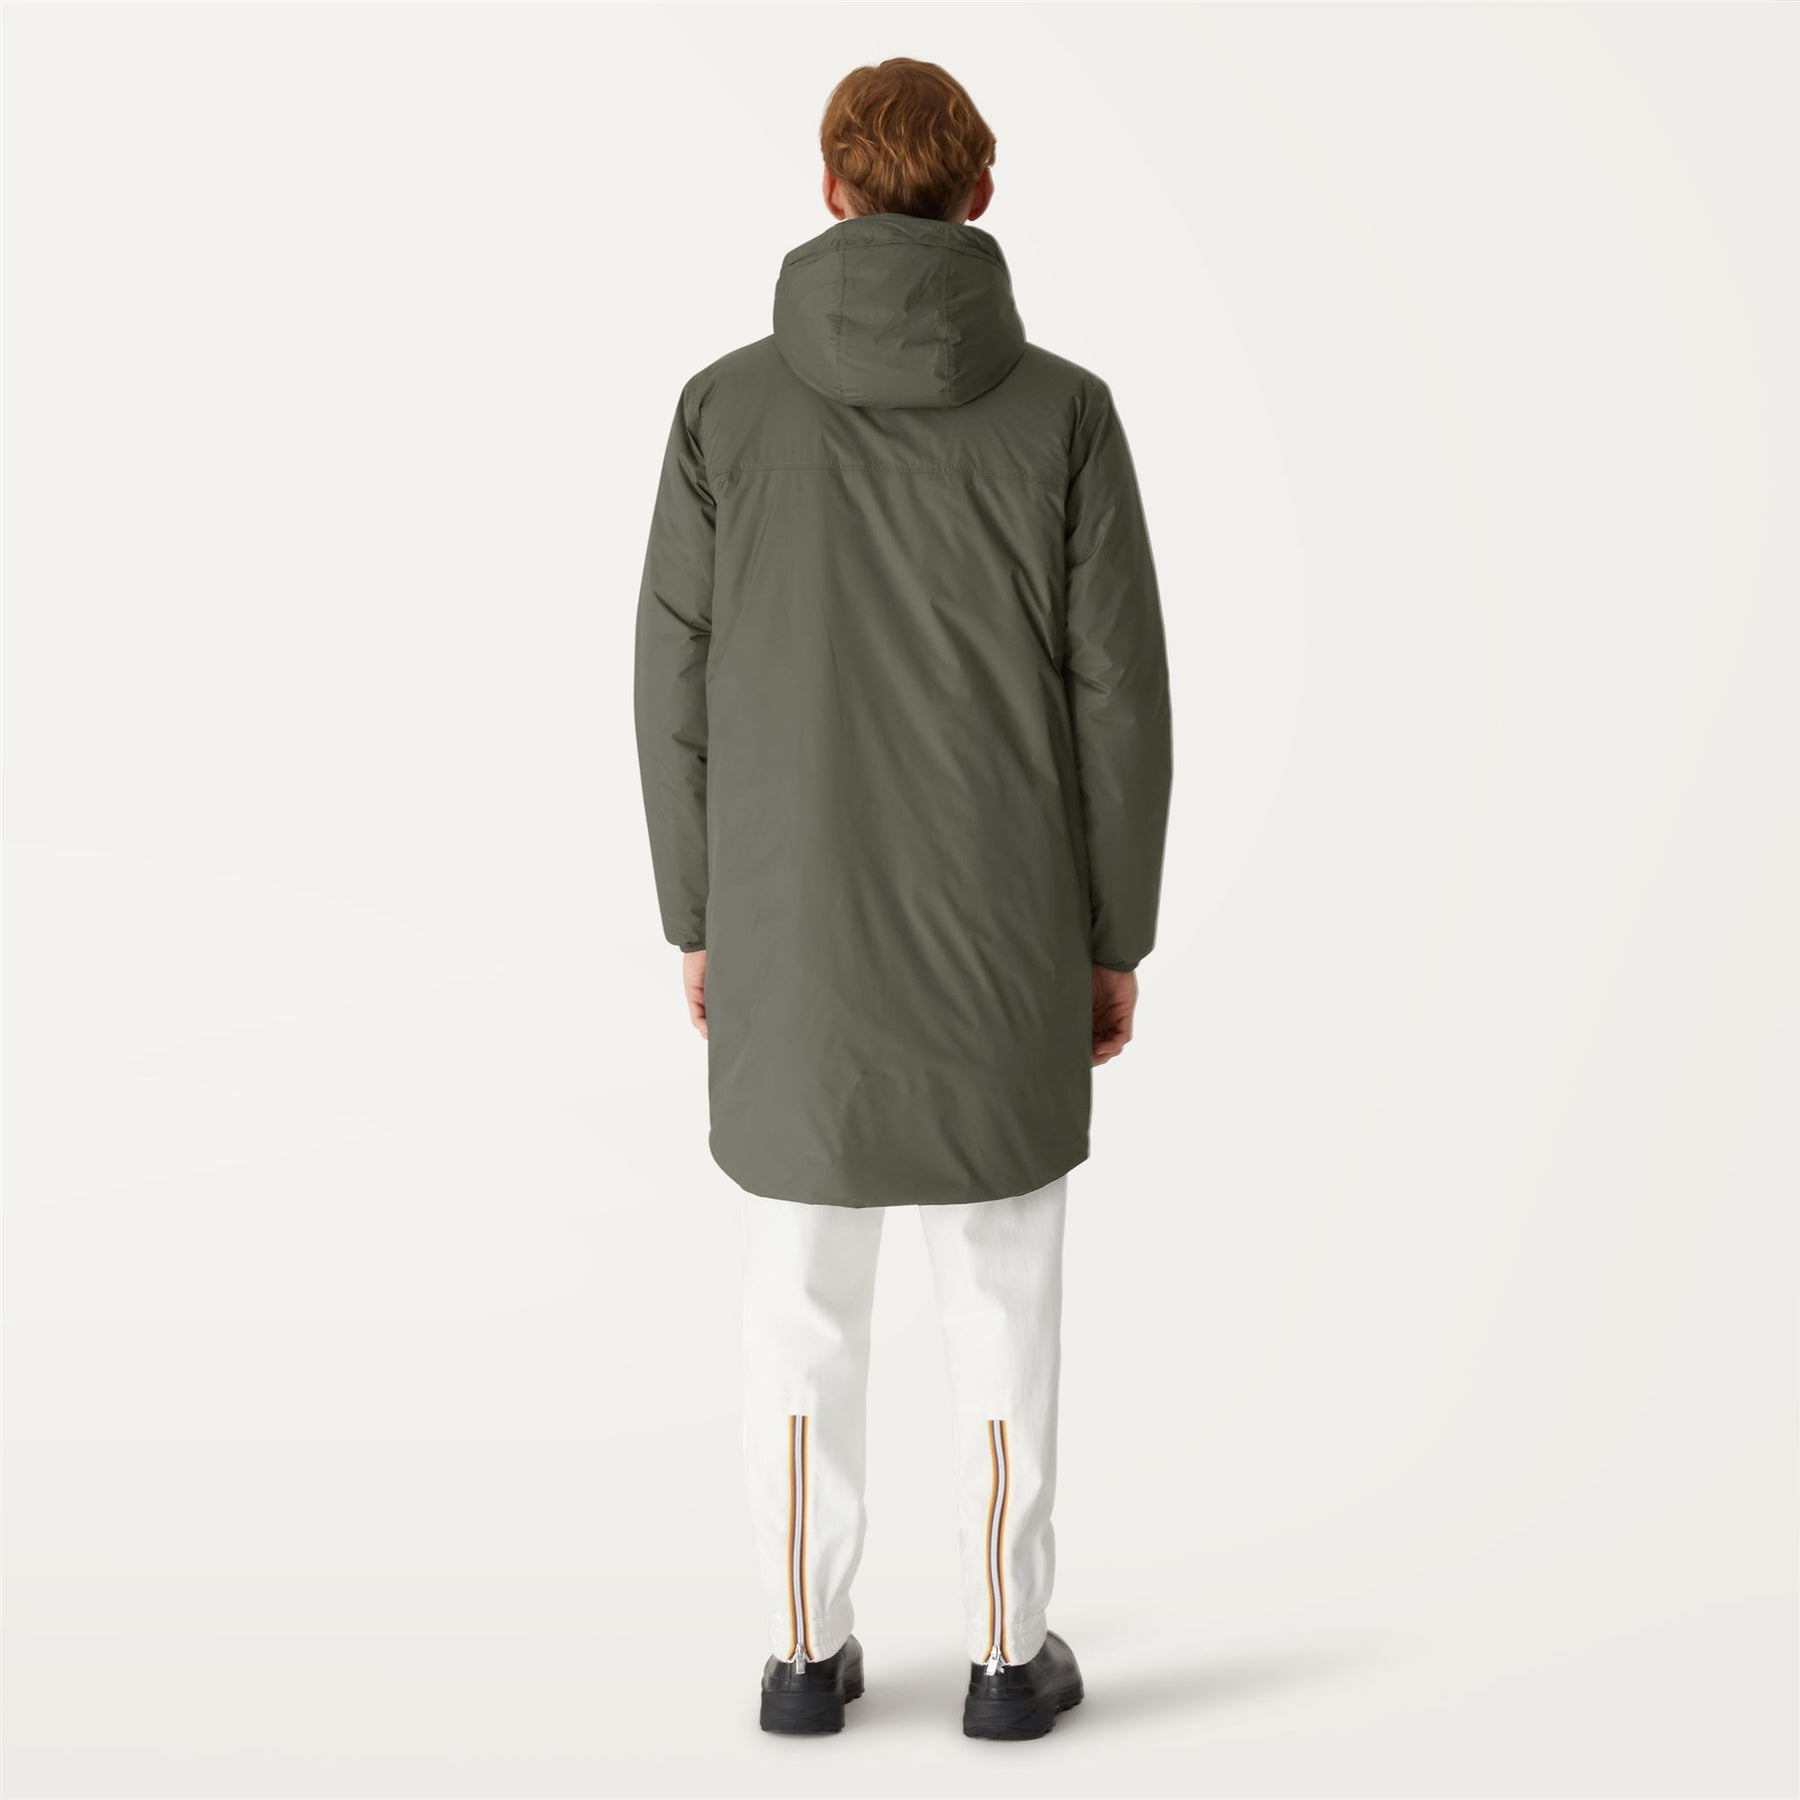 Eiffel Orsetto - Unisex Packable Lined Long Rain Jacket in Green Blackish